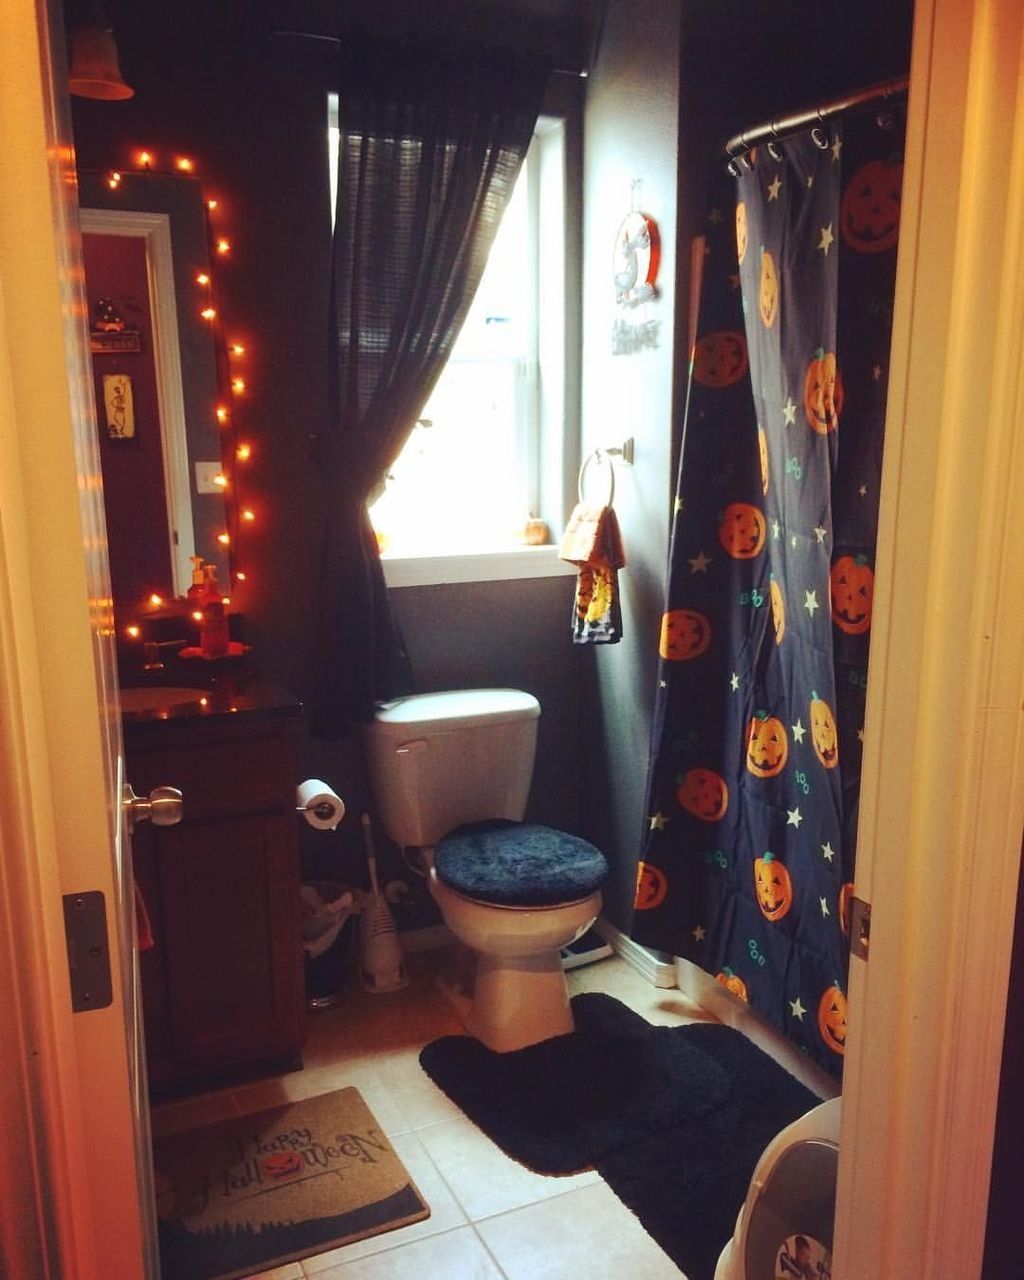 30+ Scary Halloween Decorating Ideas For Your Bathroom Halloween